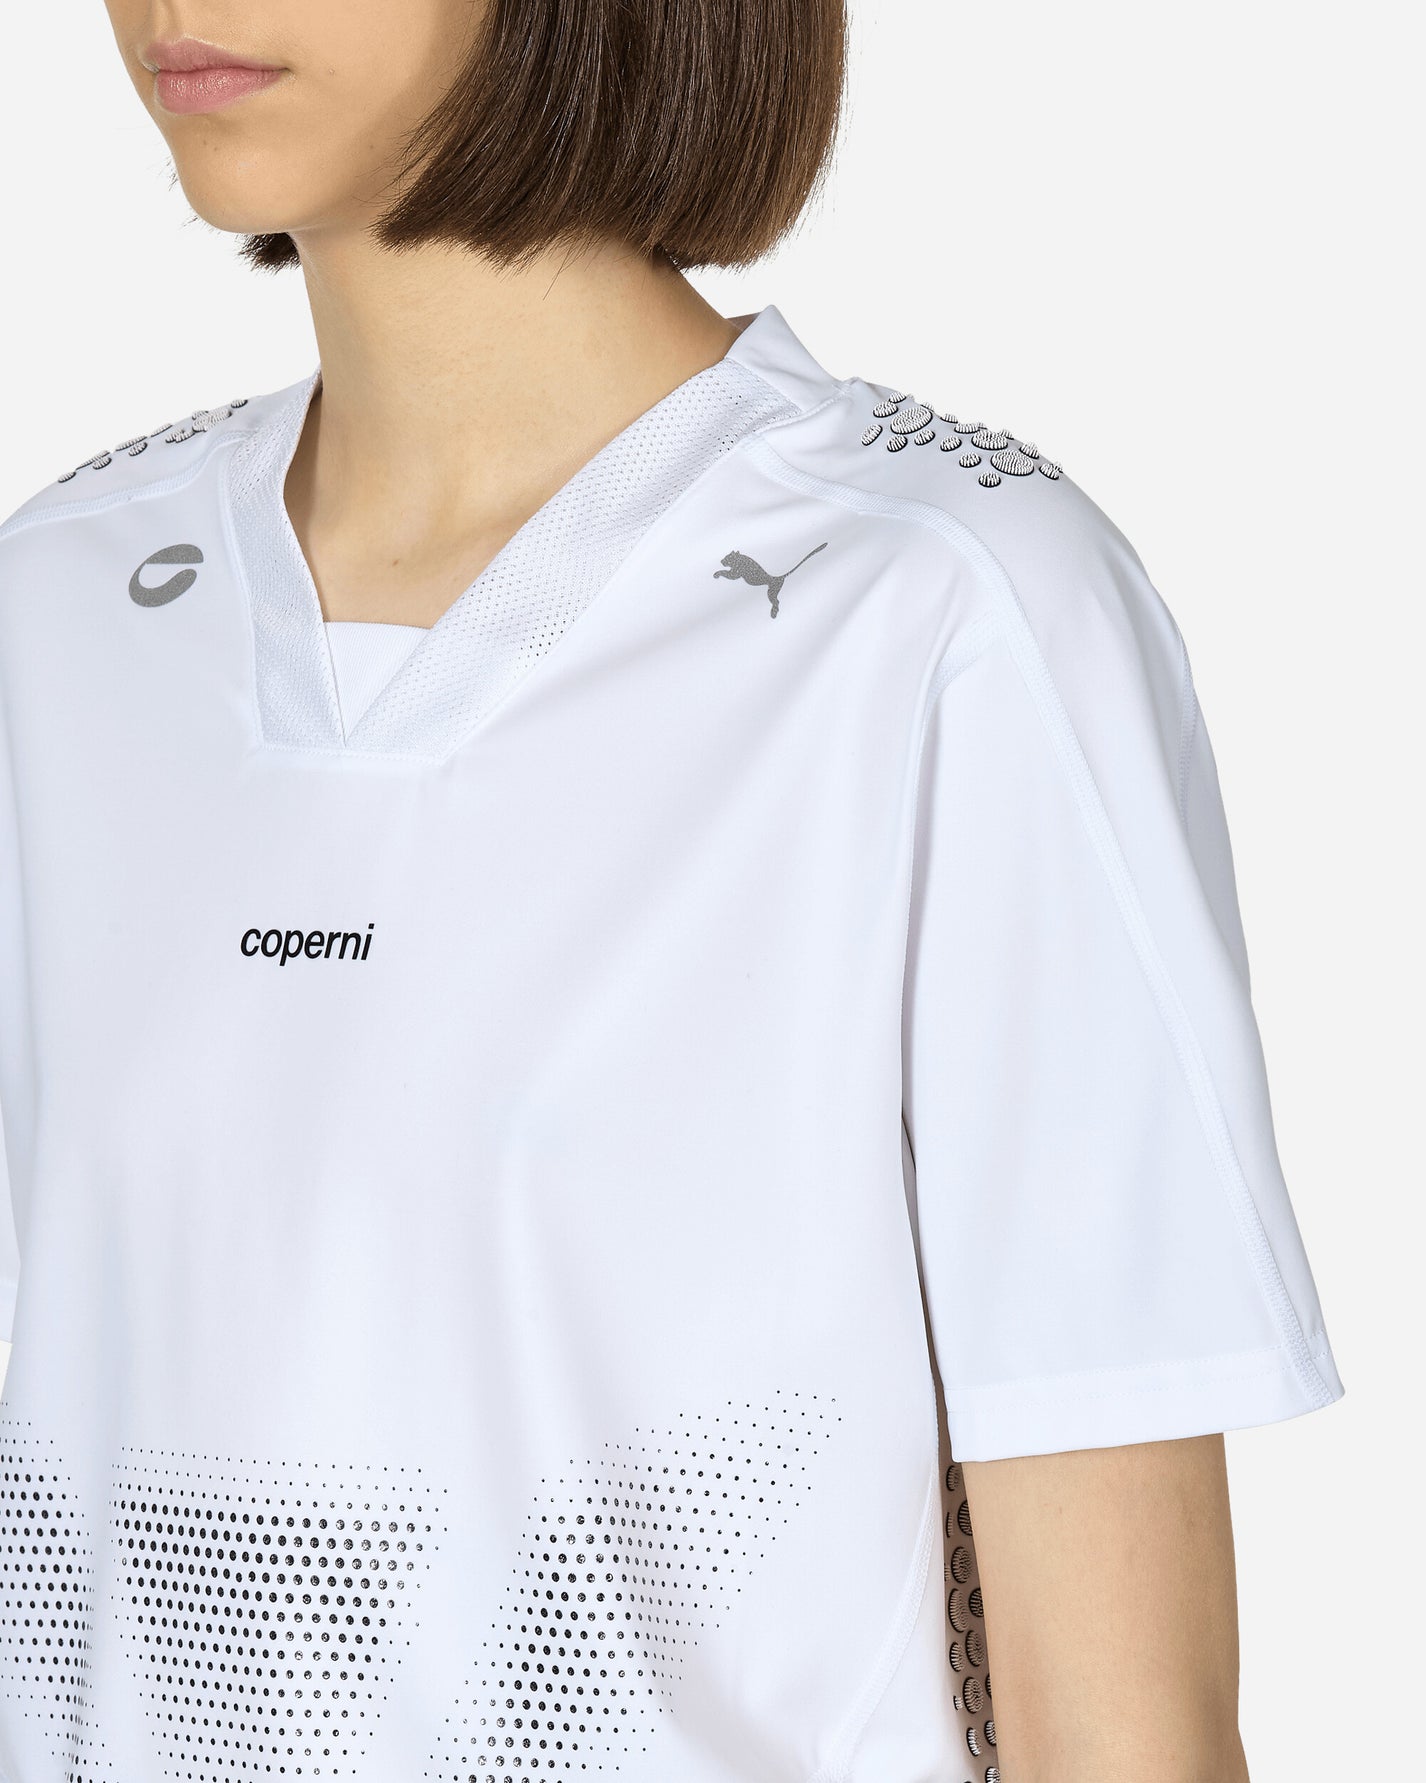 Coperni Wmns Football Jersey White T-Shirts Shortsleeve 62798202 PUWHTE